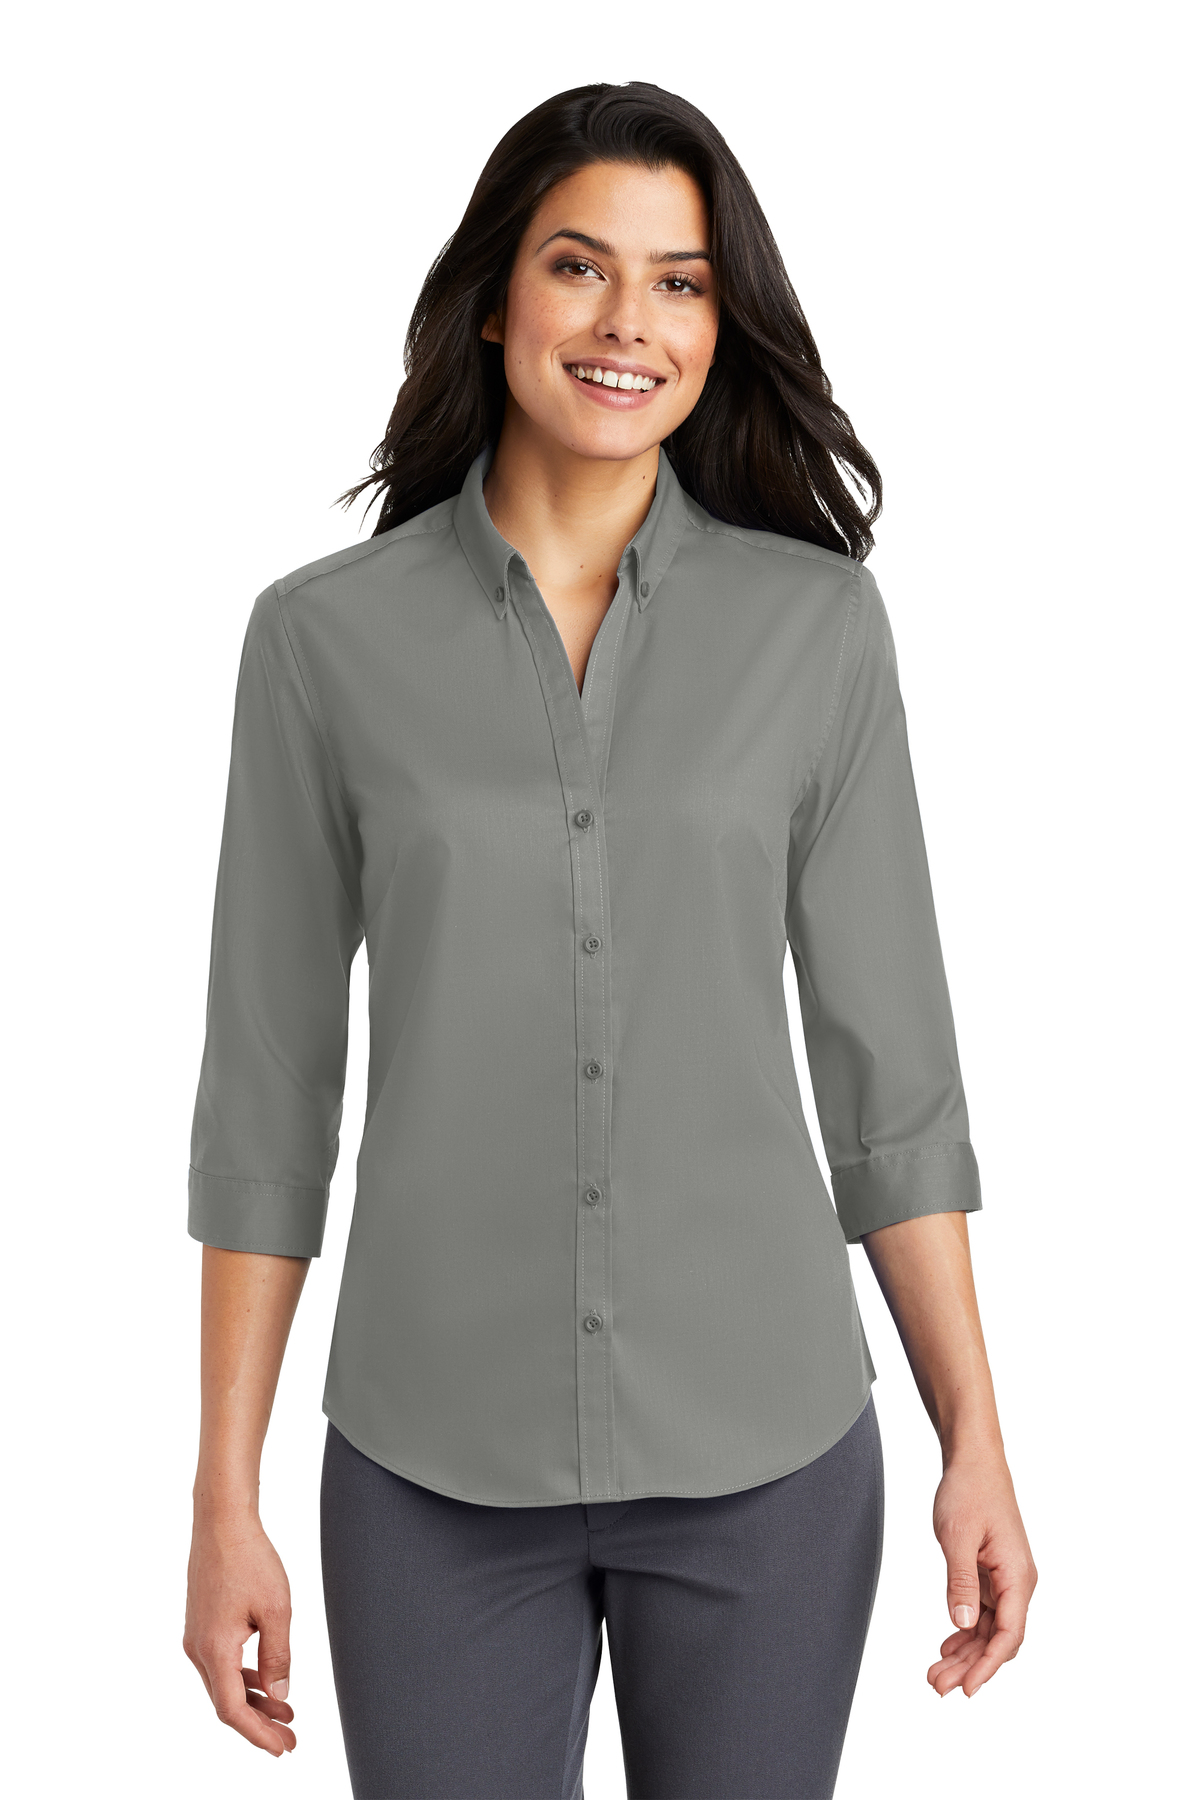 Classic Status hostess Port Authority Ladies 3/4-Sleeve SuperPro Twill Shirt | Product | Port  Authority